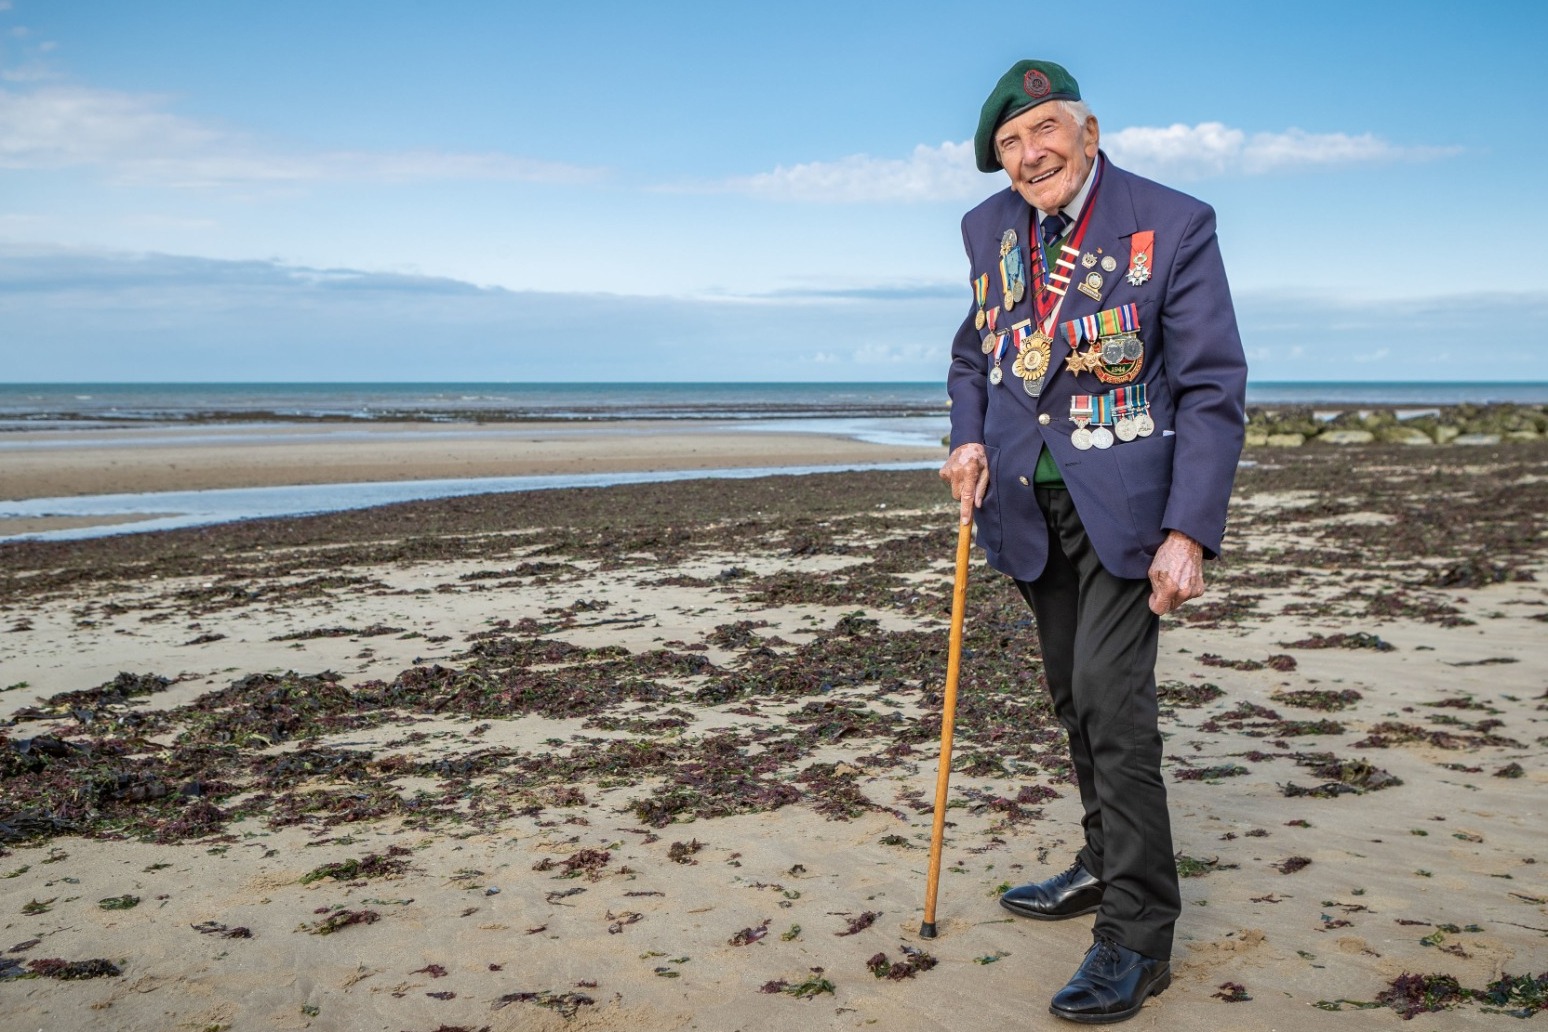 D-Day veteran Harry Billinge dies aged 96, his family says 